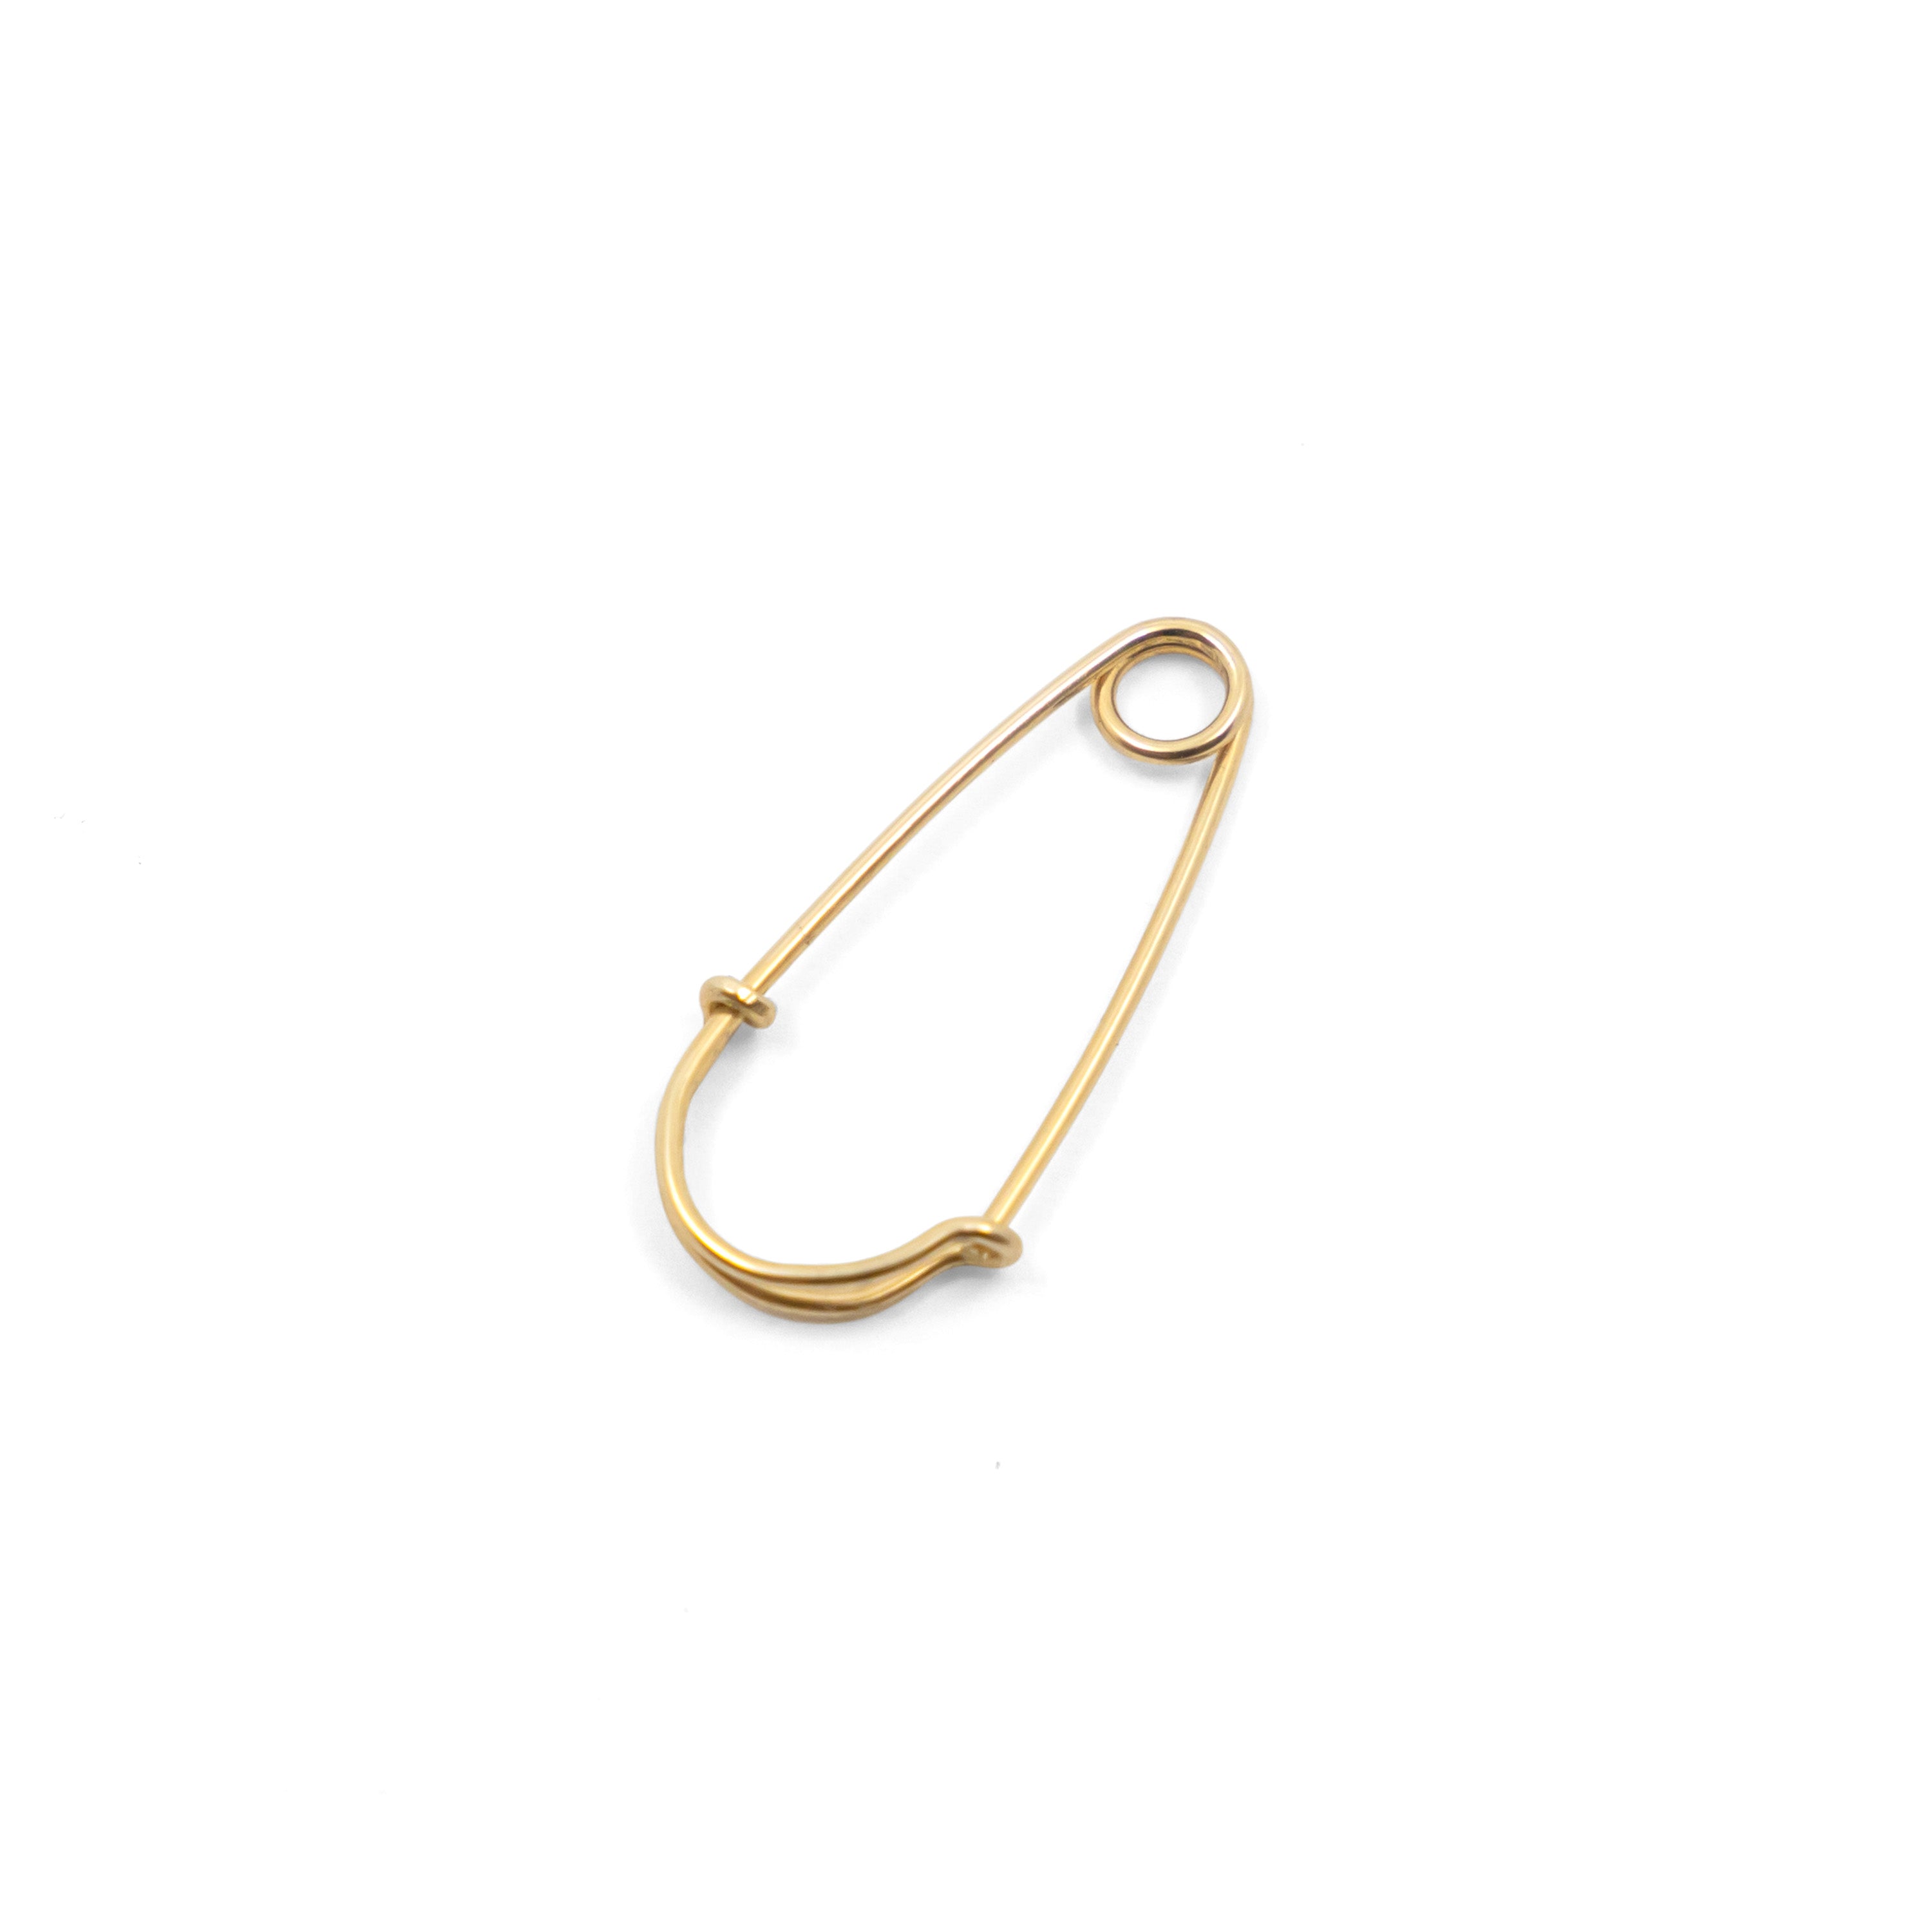 Safety pin earrings – JuDeLovesYou